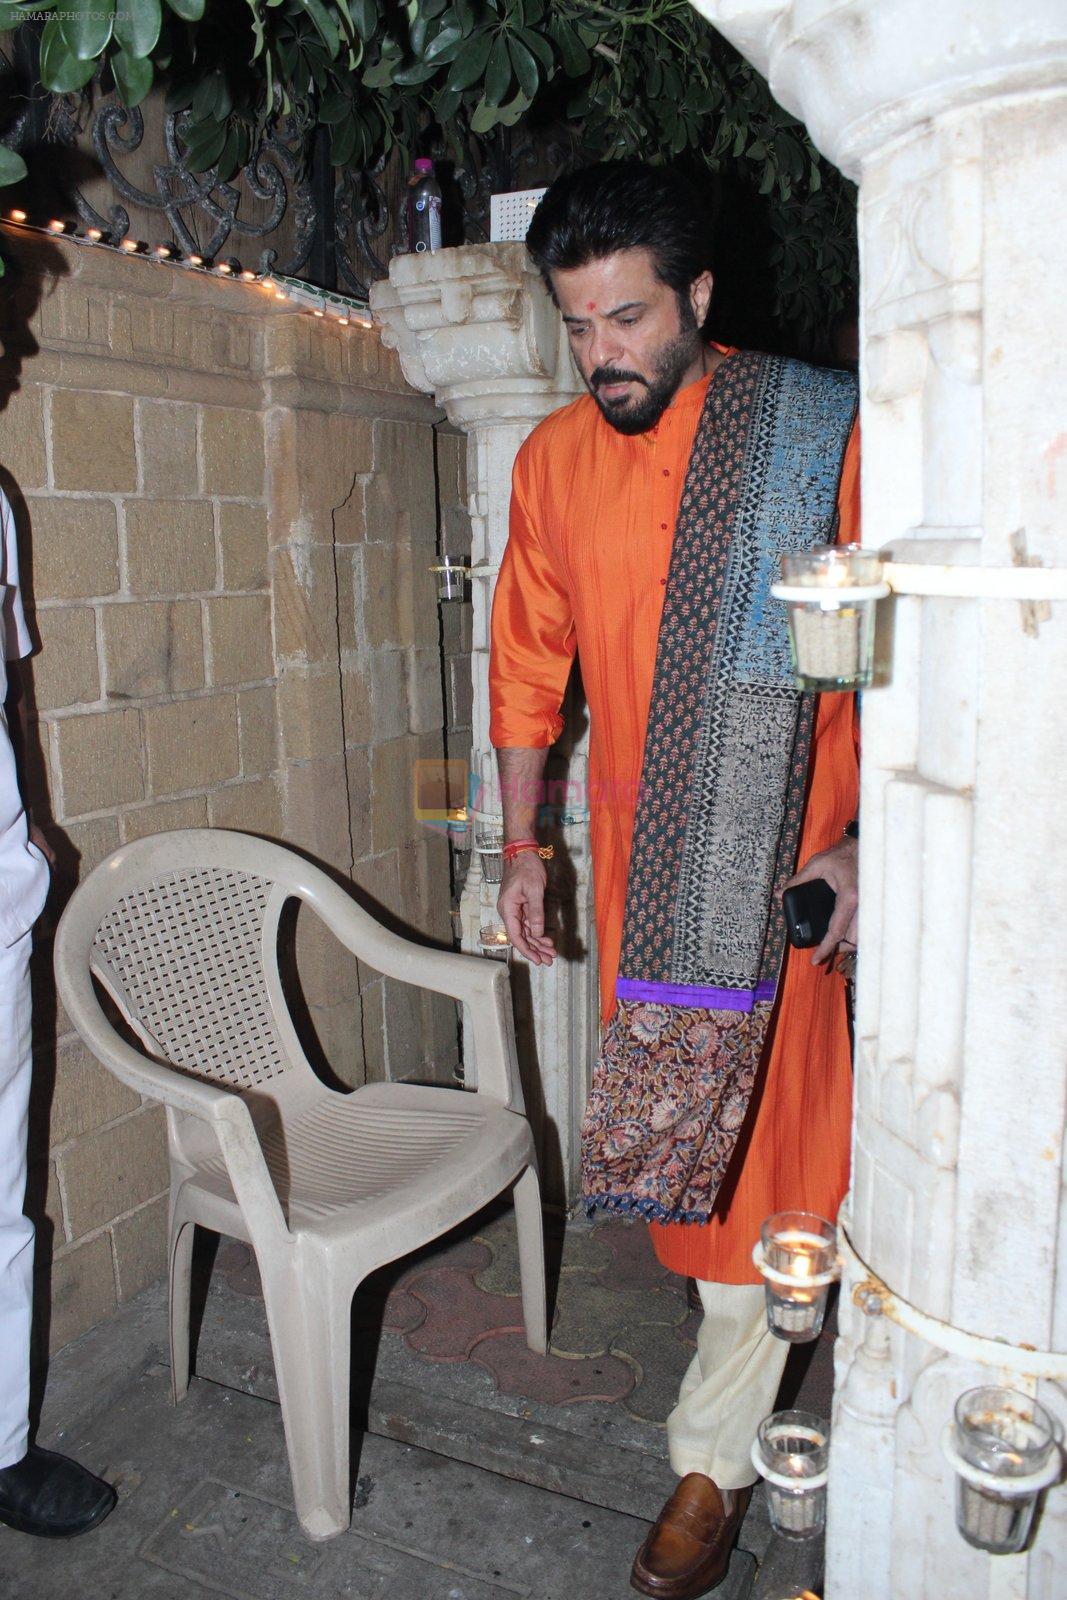 Anil Kapoor's diwali bash on 11th Nov 2015